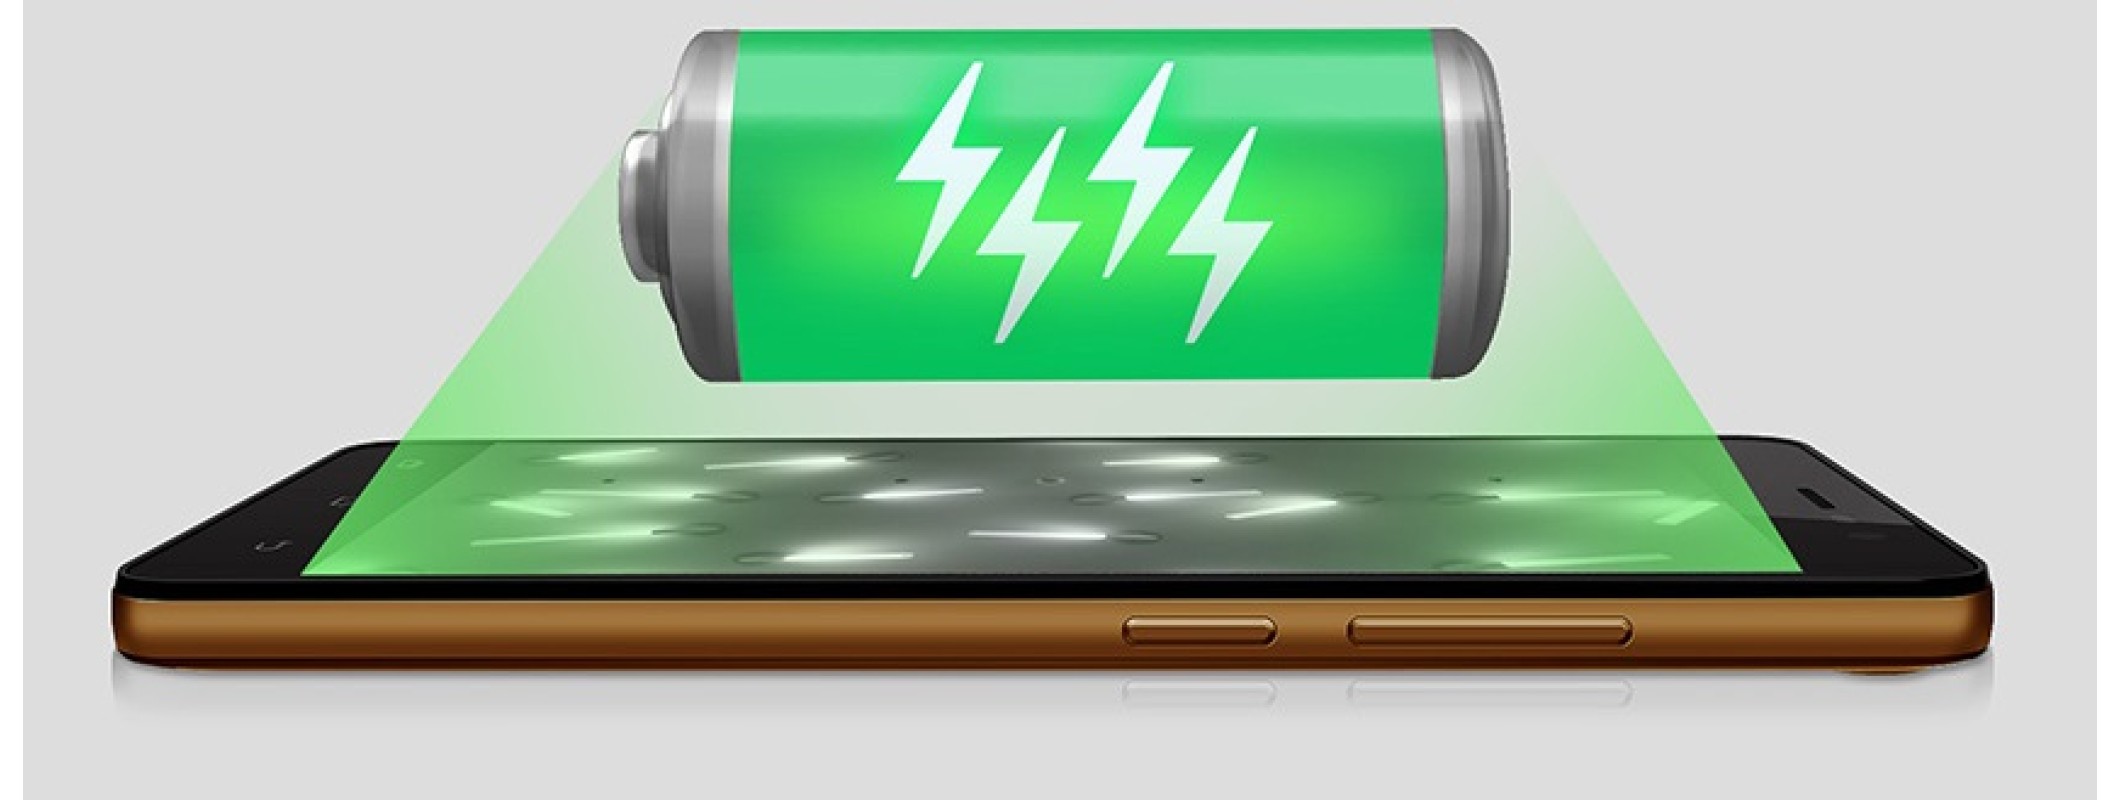 Battery last. Long Battery Life. Best Battery Life smartphones 2023. "Smartphone Battery presentation". Battery lasts longer.